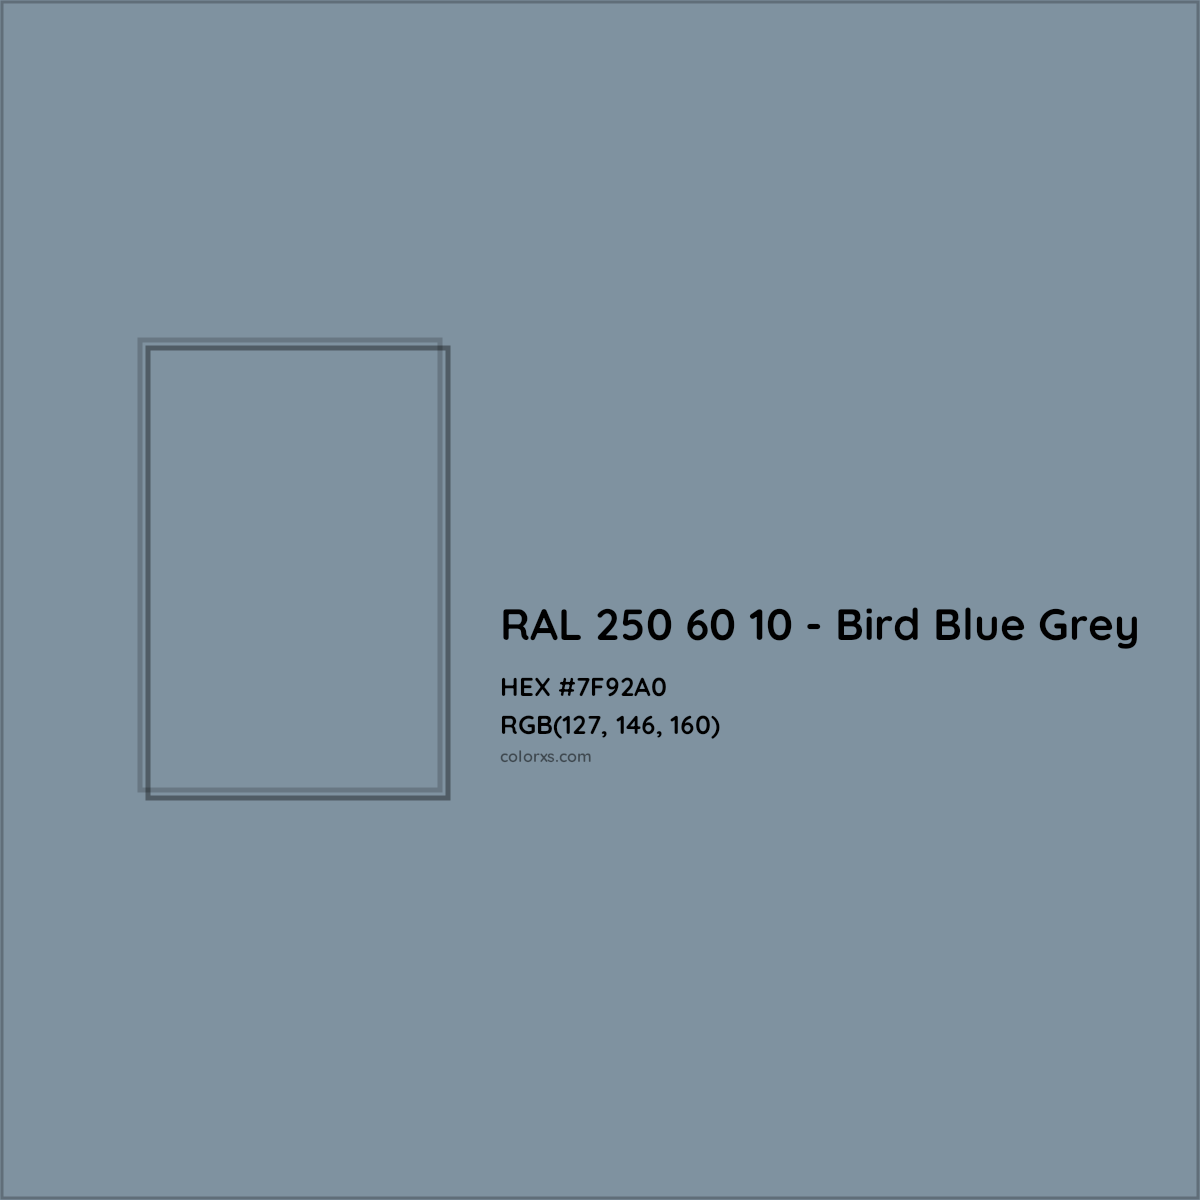 HEX #7F92A0 RAL 250 60 10 - Bird Blue Grey CMS RAL Design - Color Code